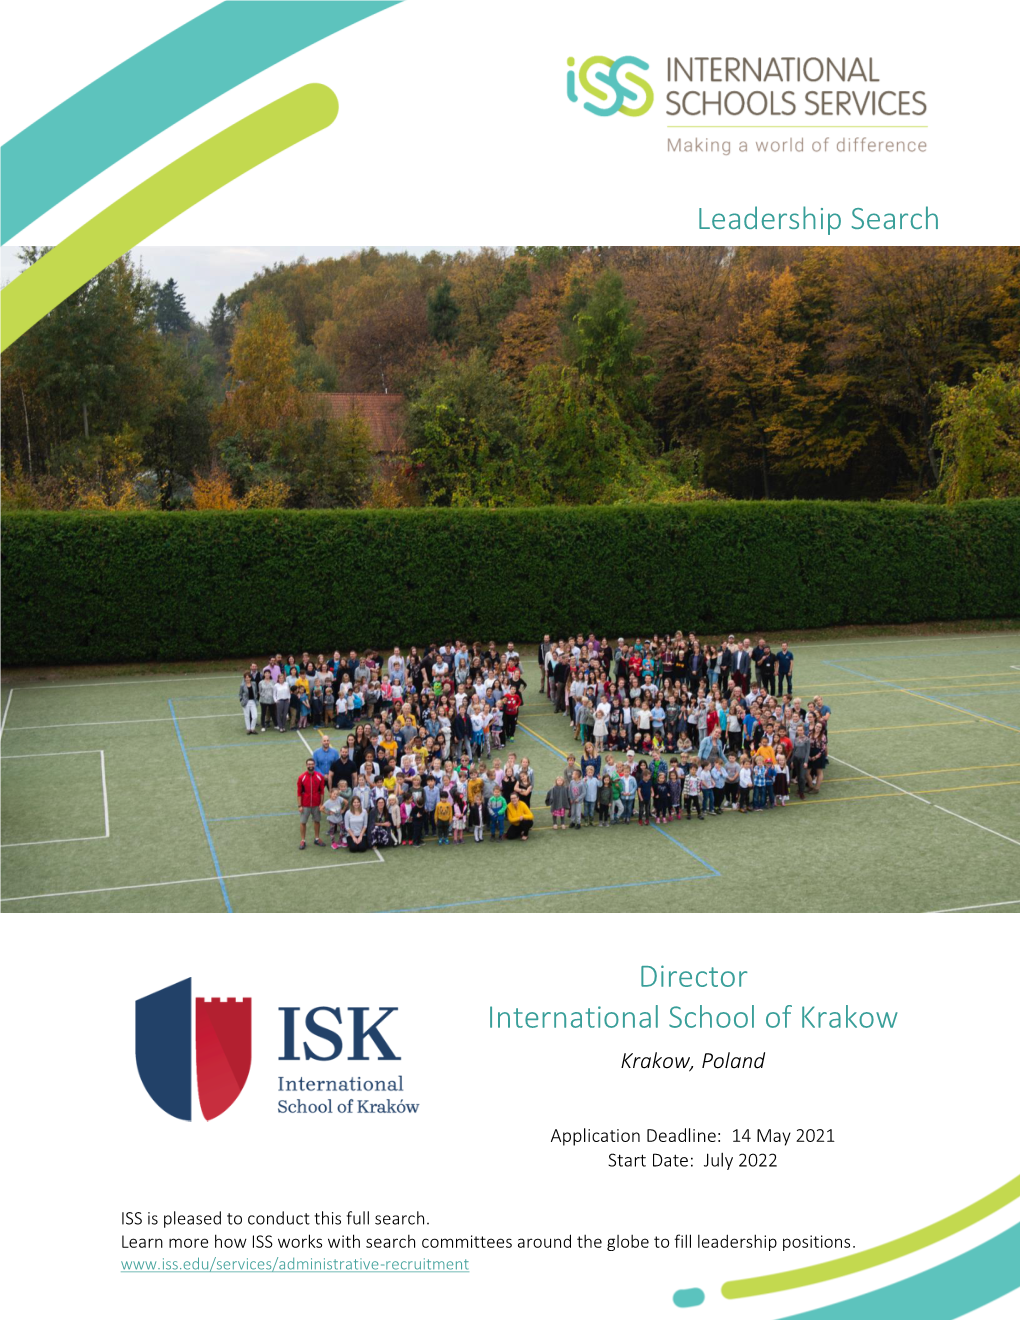 International School of Krakow Krakow, Poland